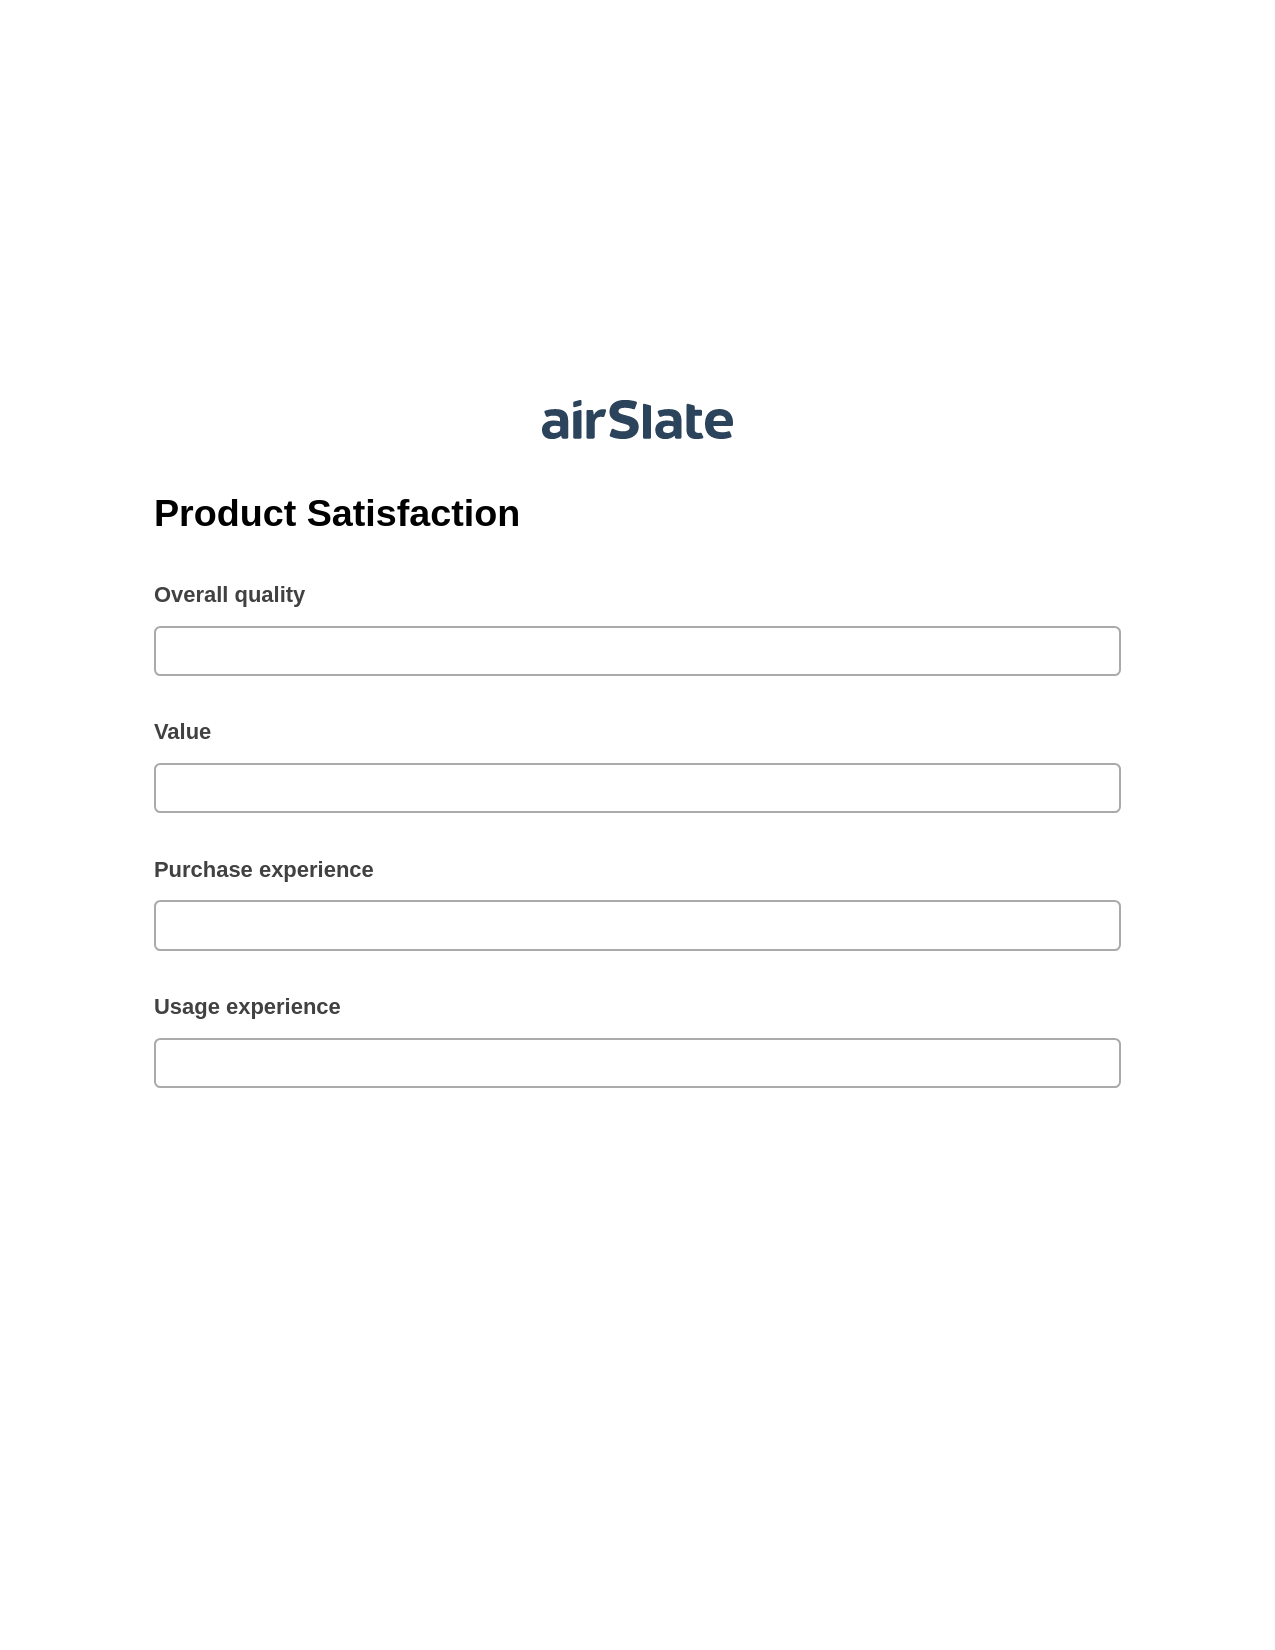 Product Satisfaction Pre-fill Slate from MS Dynamics 365 Records Bot, Invoke Salesforce Process Bot, OneDrive Bot